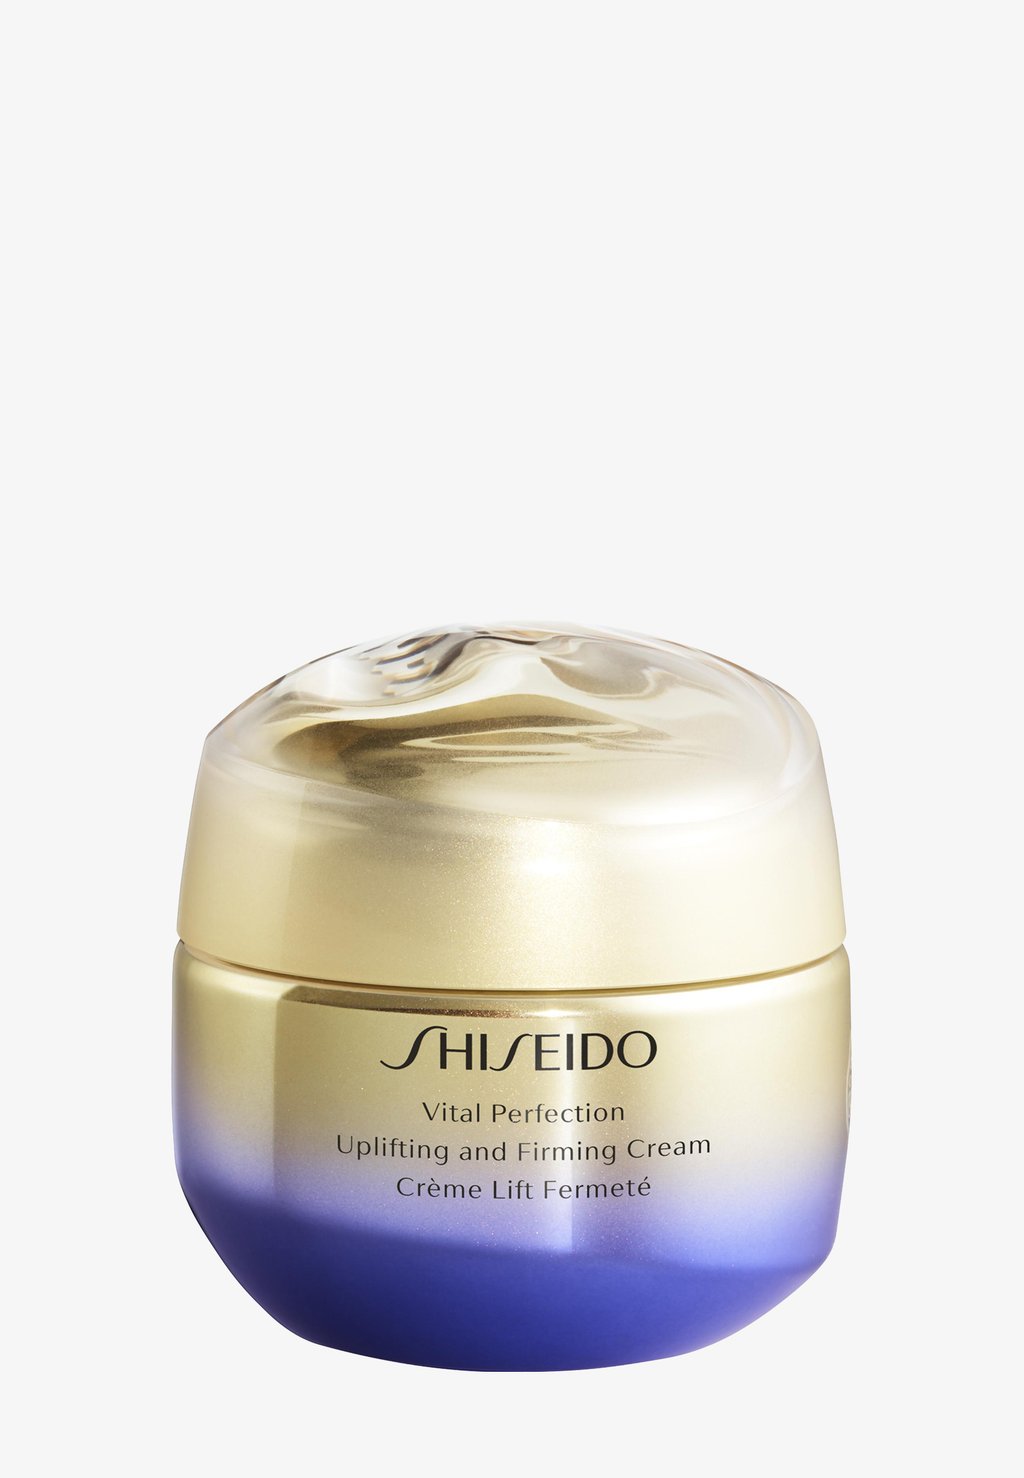 Дневной крем Vital Perfection Uplifting And Firming Cream 50Ml Shiseido